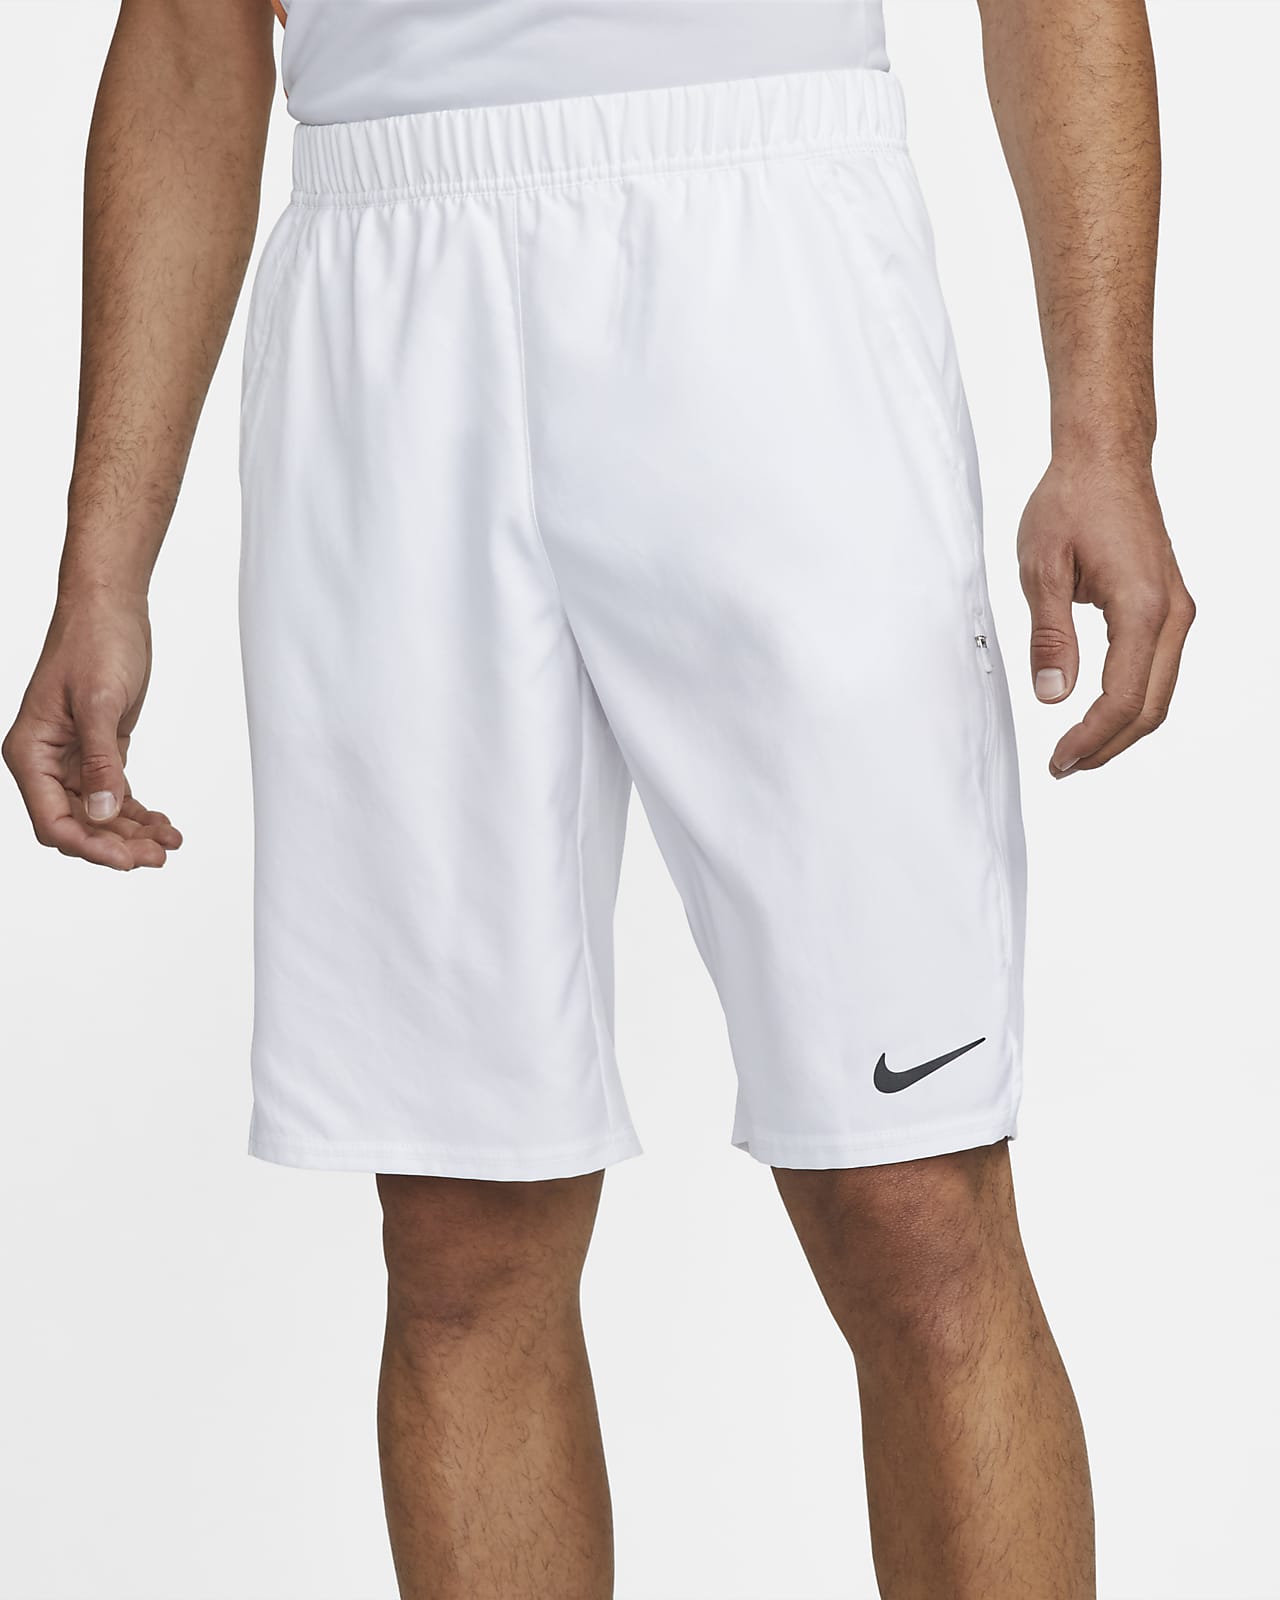 NikeCourt Dri-FIT Victory Men's 11 Tennis Shorts